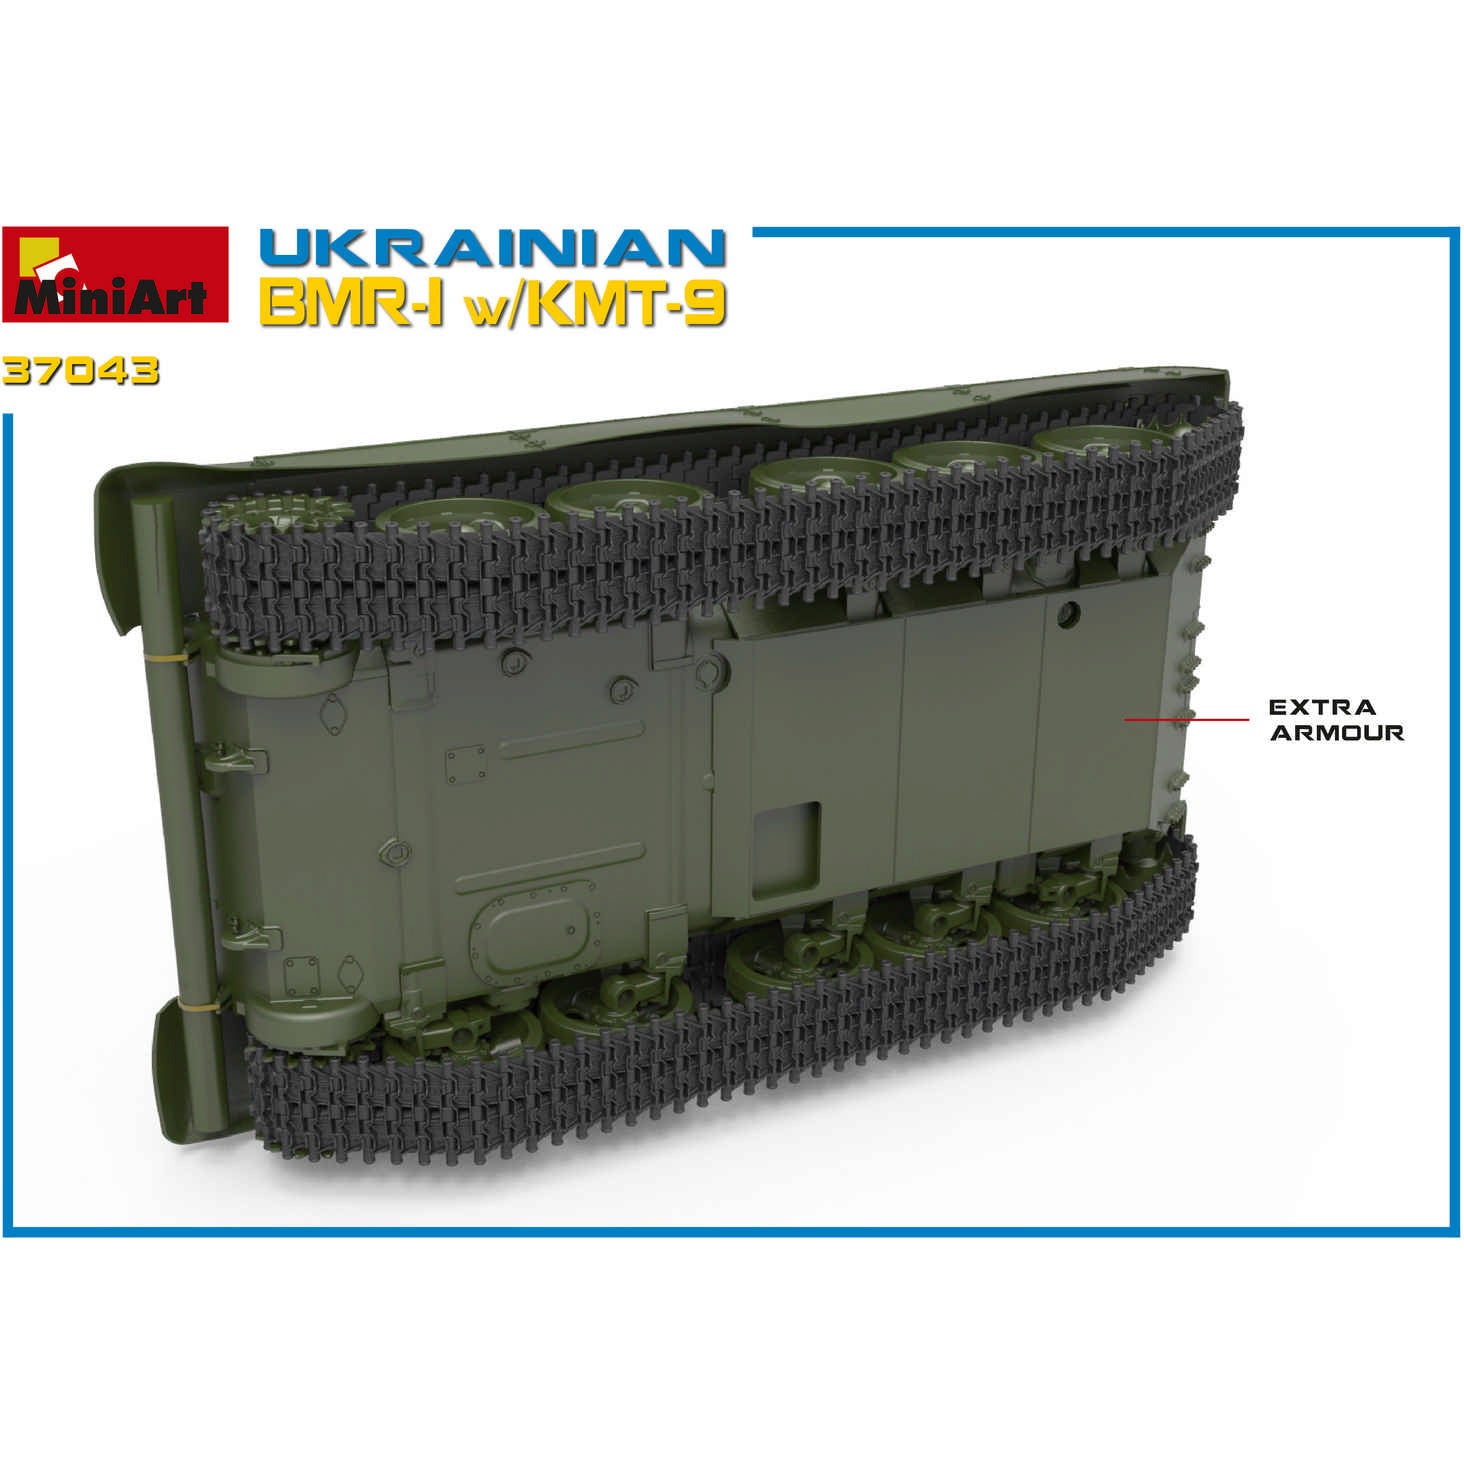 MINIART 1/35 Ukrainian BMR-1 with KMT-9